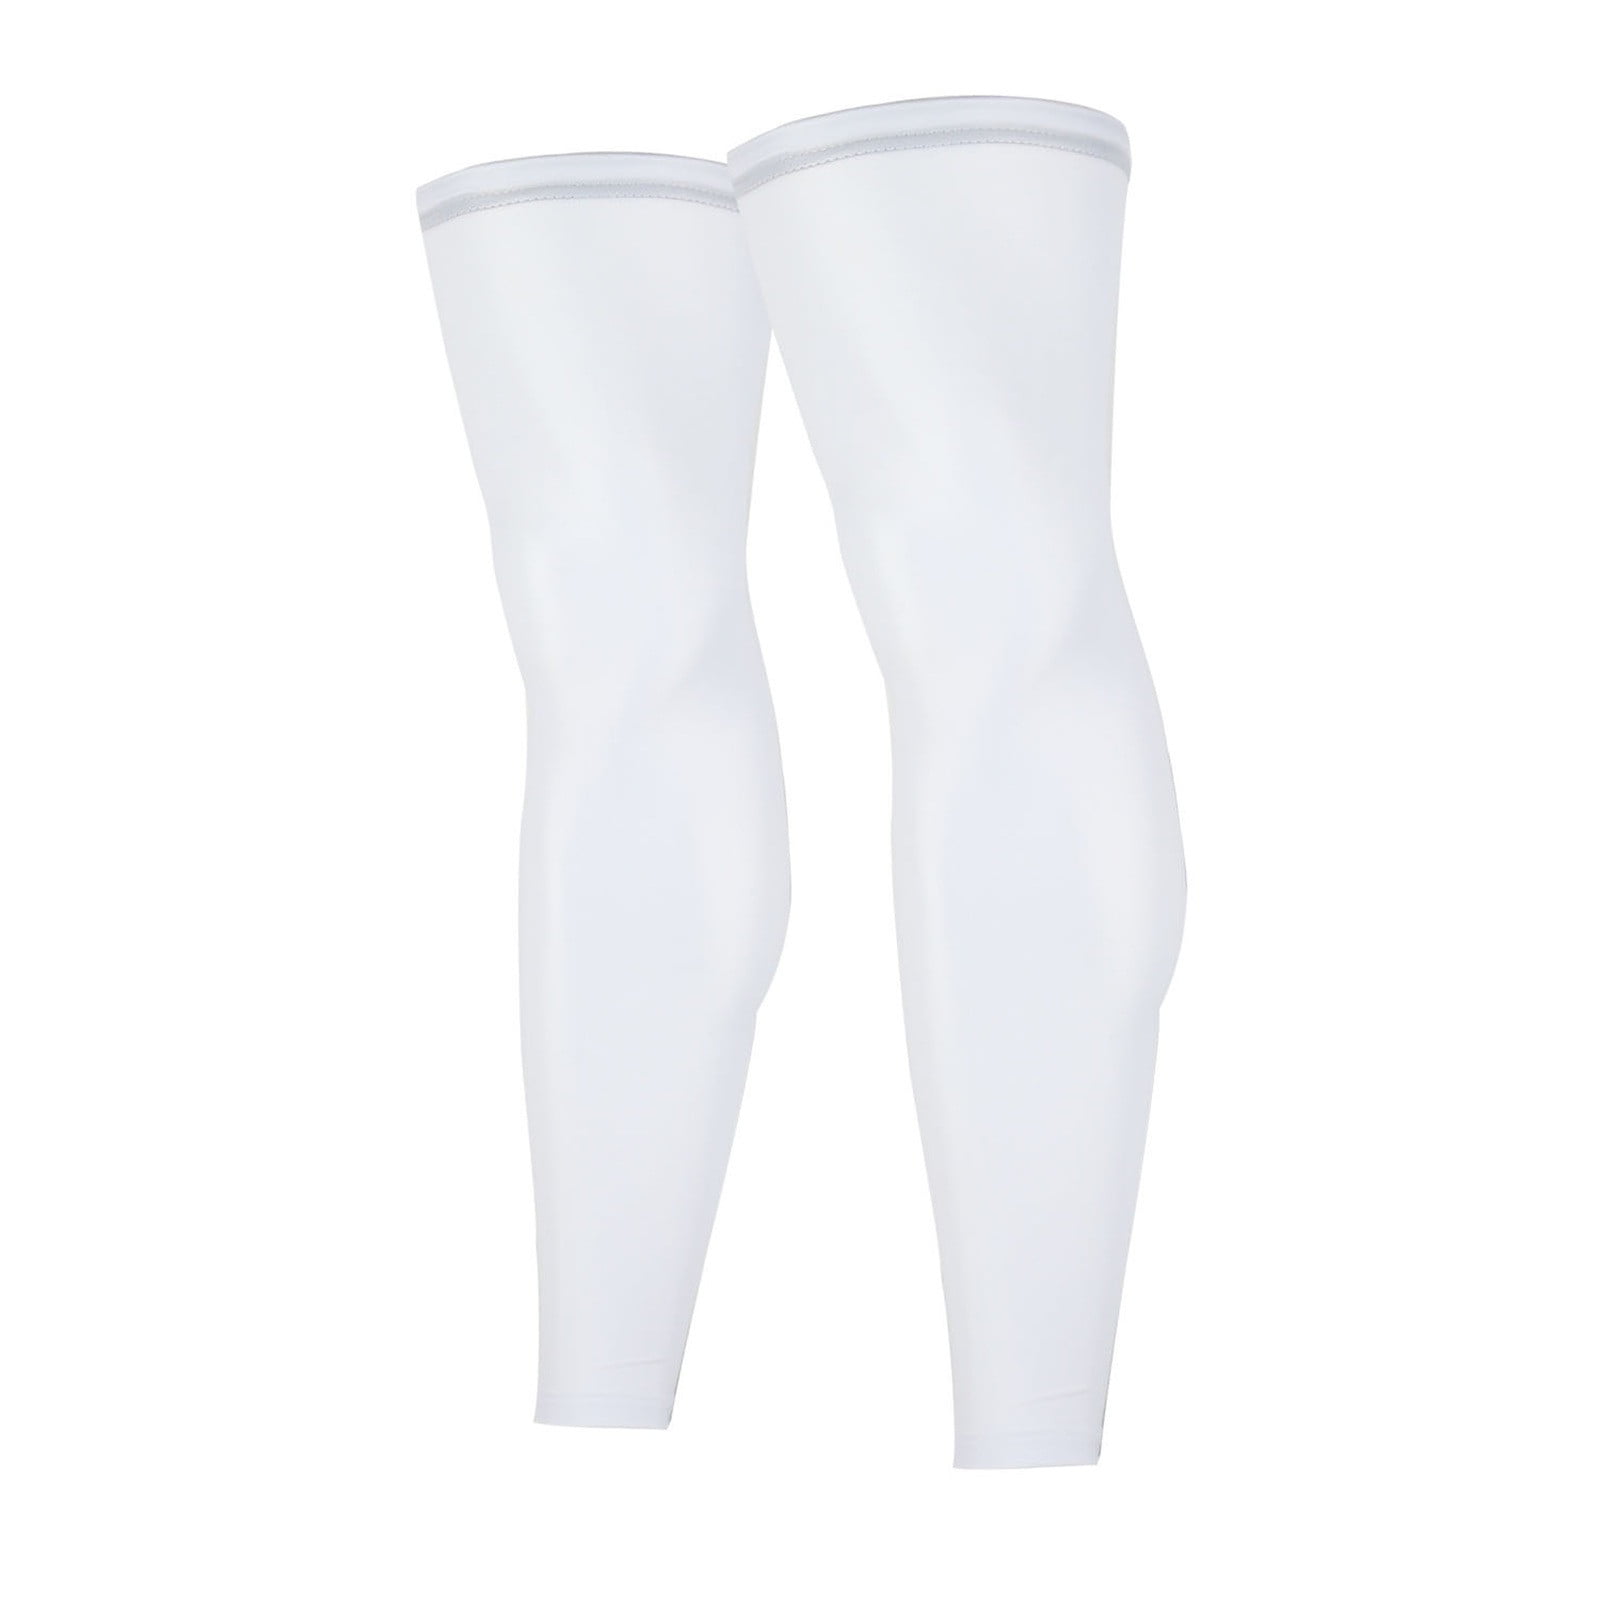 Sehao Compression Leg Sleeve Full Length Leg Sleeves Sports Cycling Leg  Sleeves for Men Women Running Basketball White M